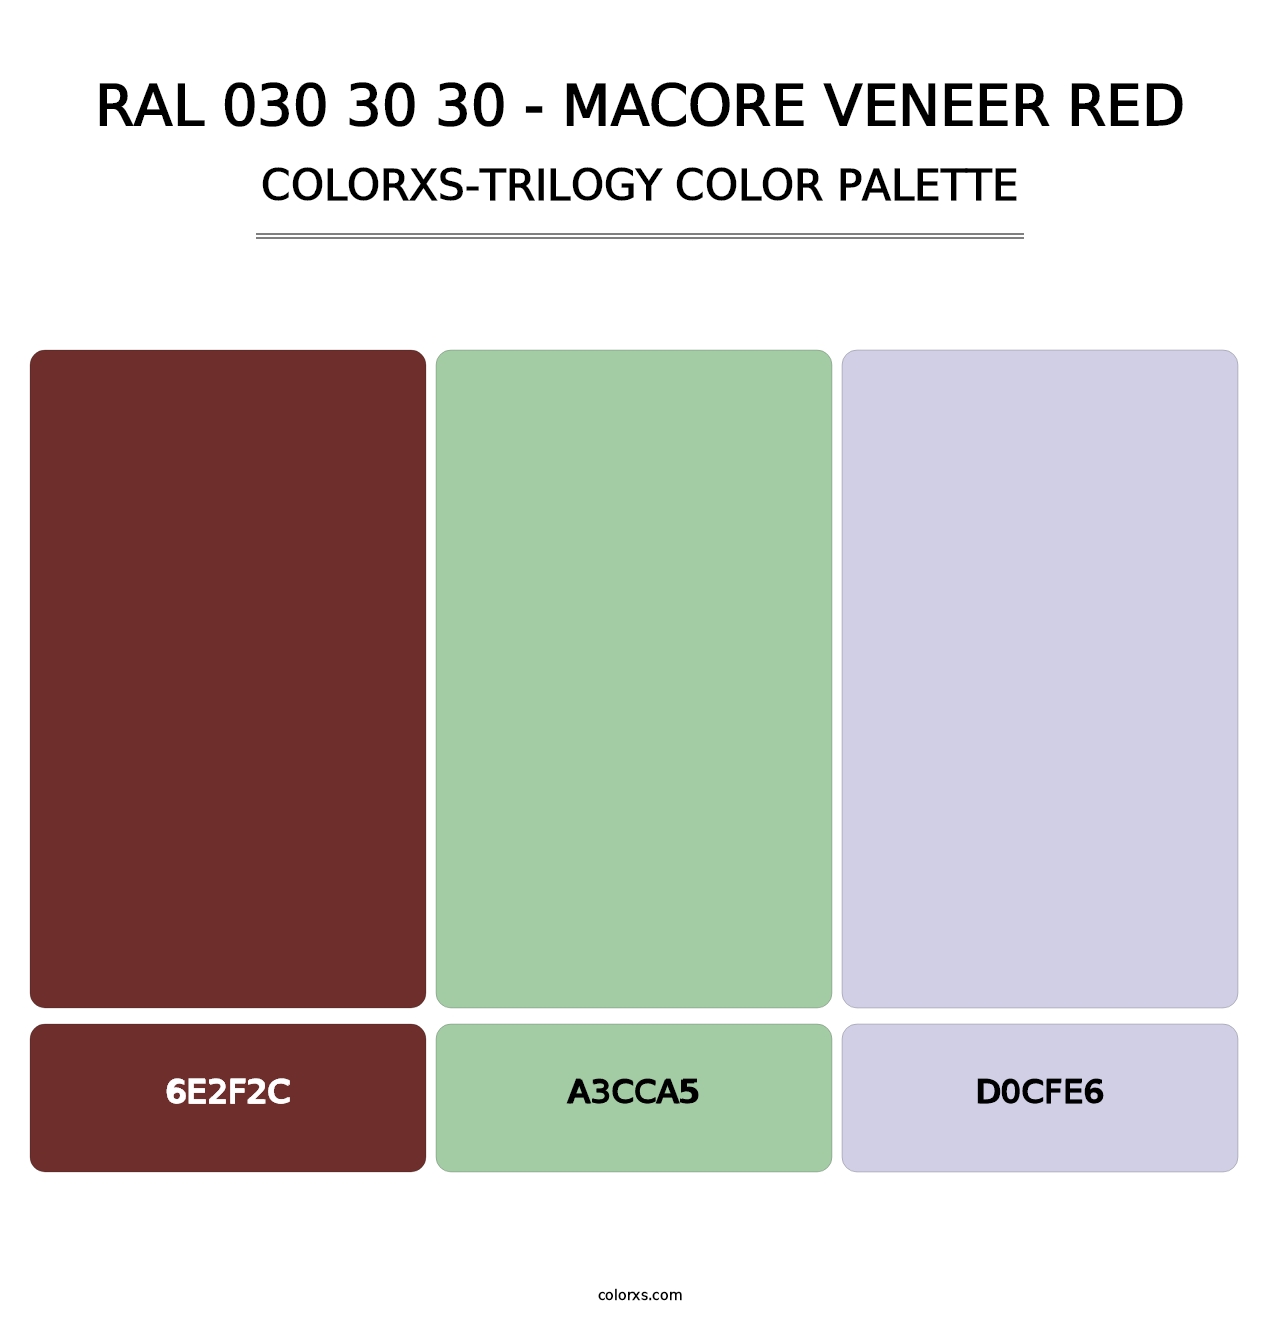 RAL 030 30 30 - Macore Veneer Red - Colorxs Trilogy Palette